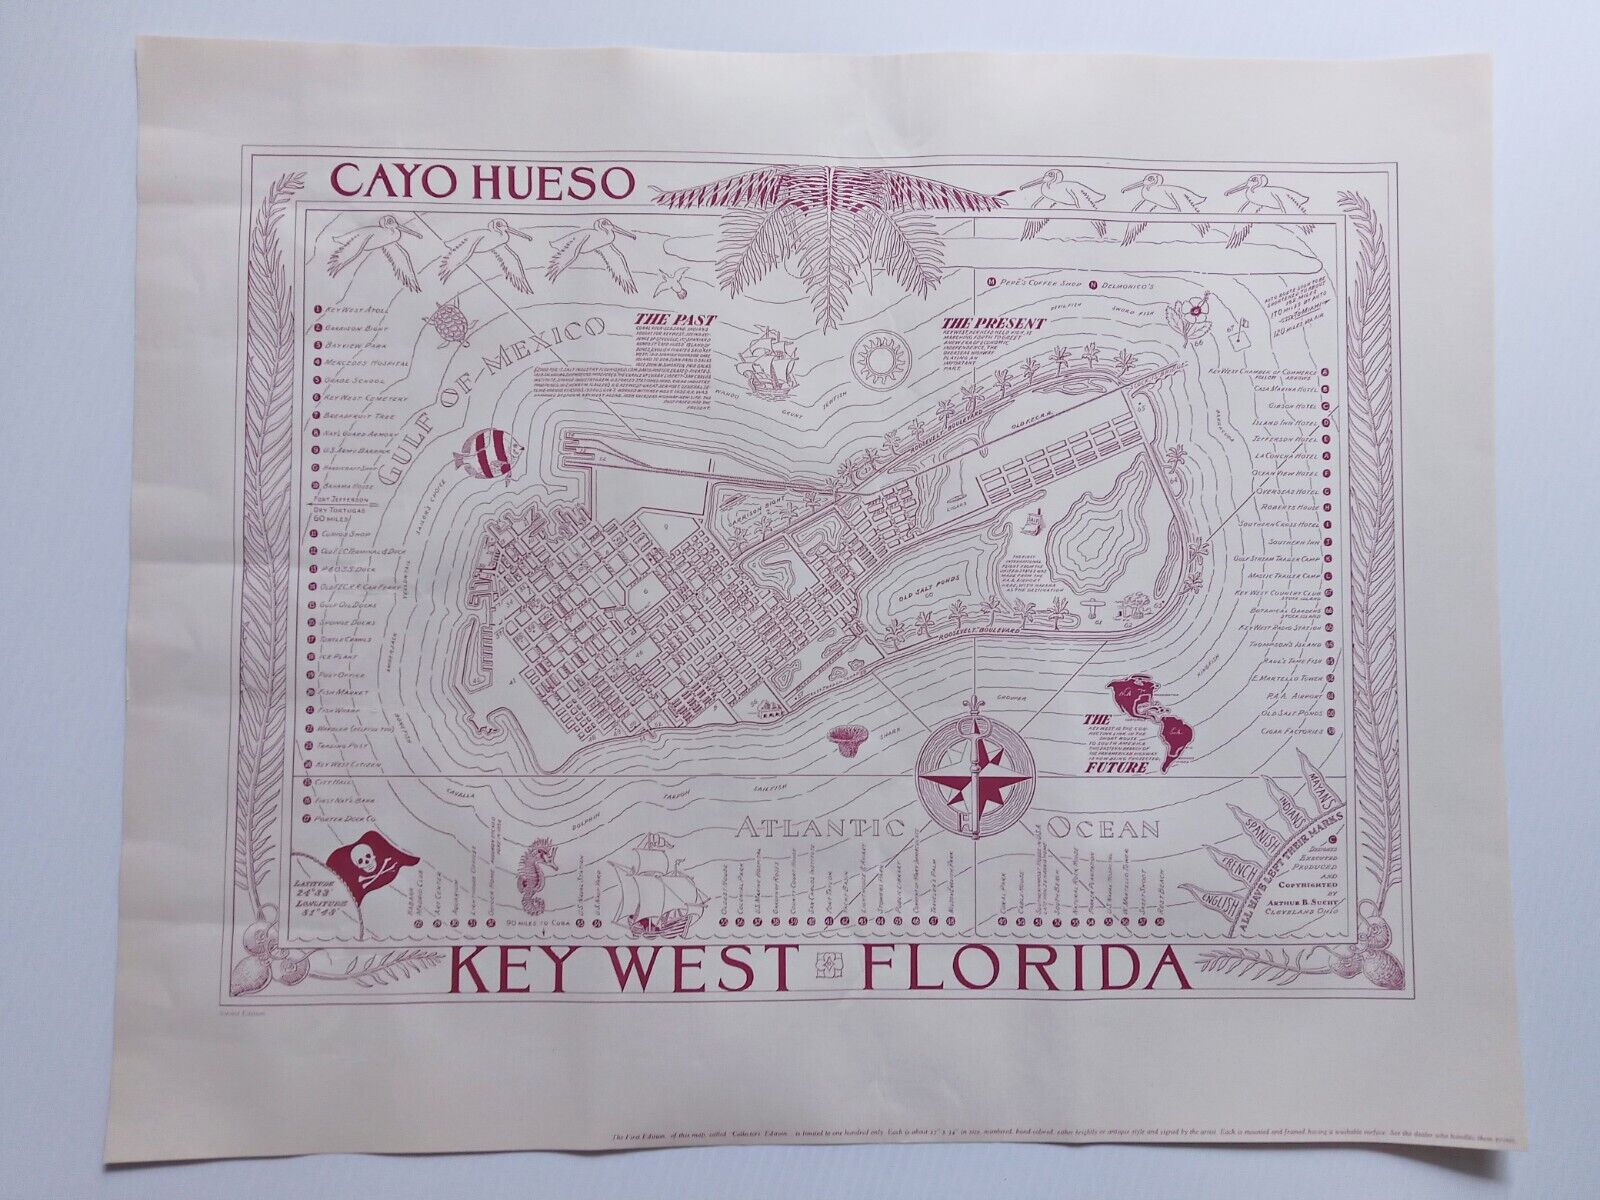 1940 Arthur Suchy, Cayo Hueso, Key West Florida, Pictorial Map